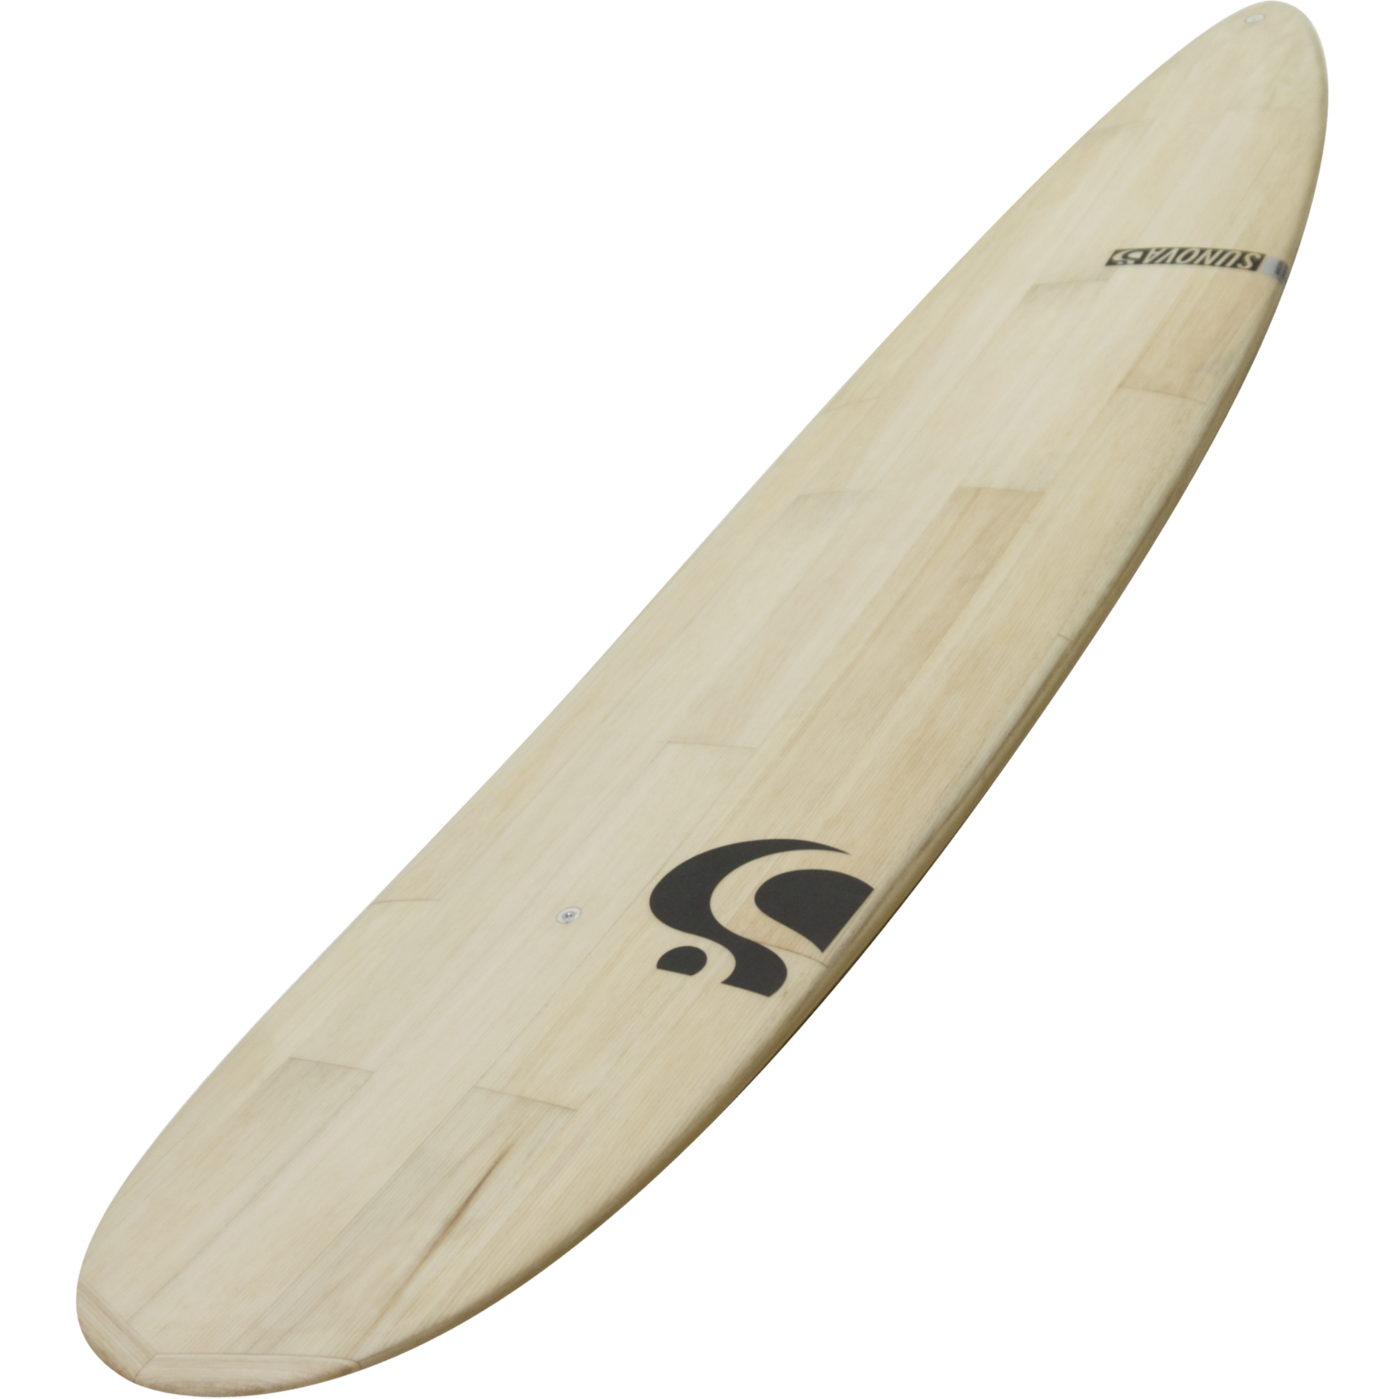 Harries Pro Surfboard 9'1"